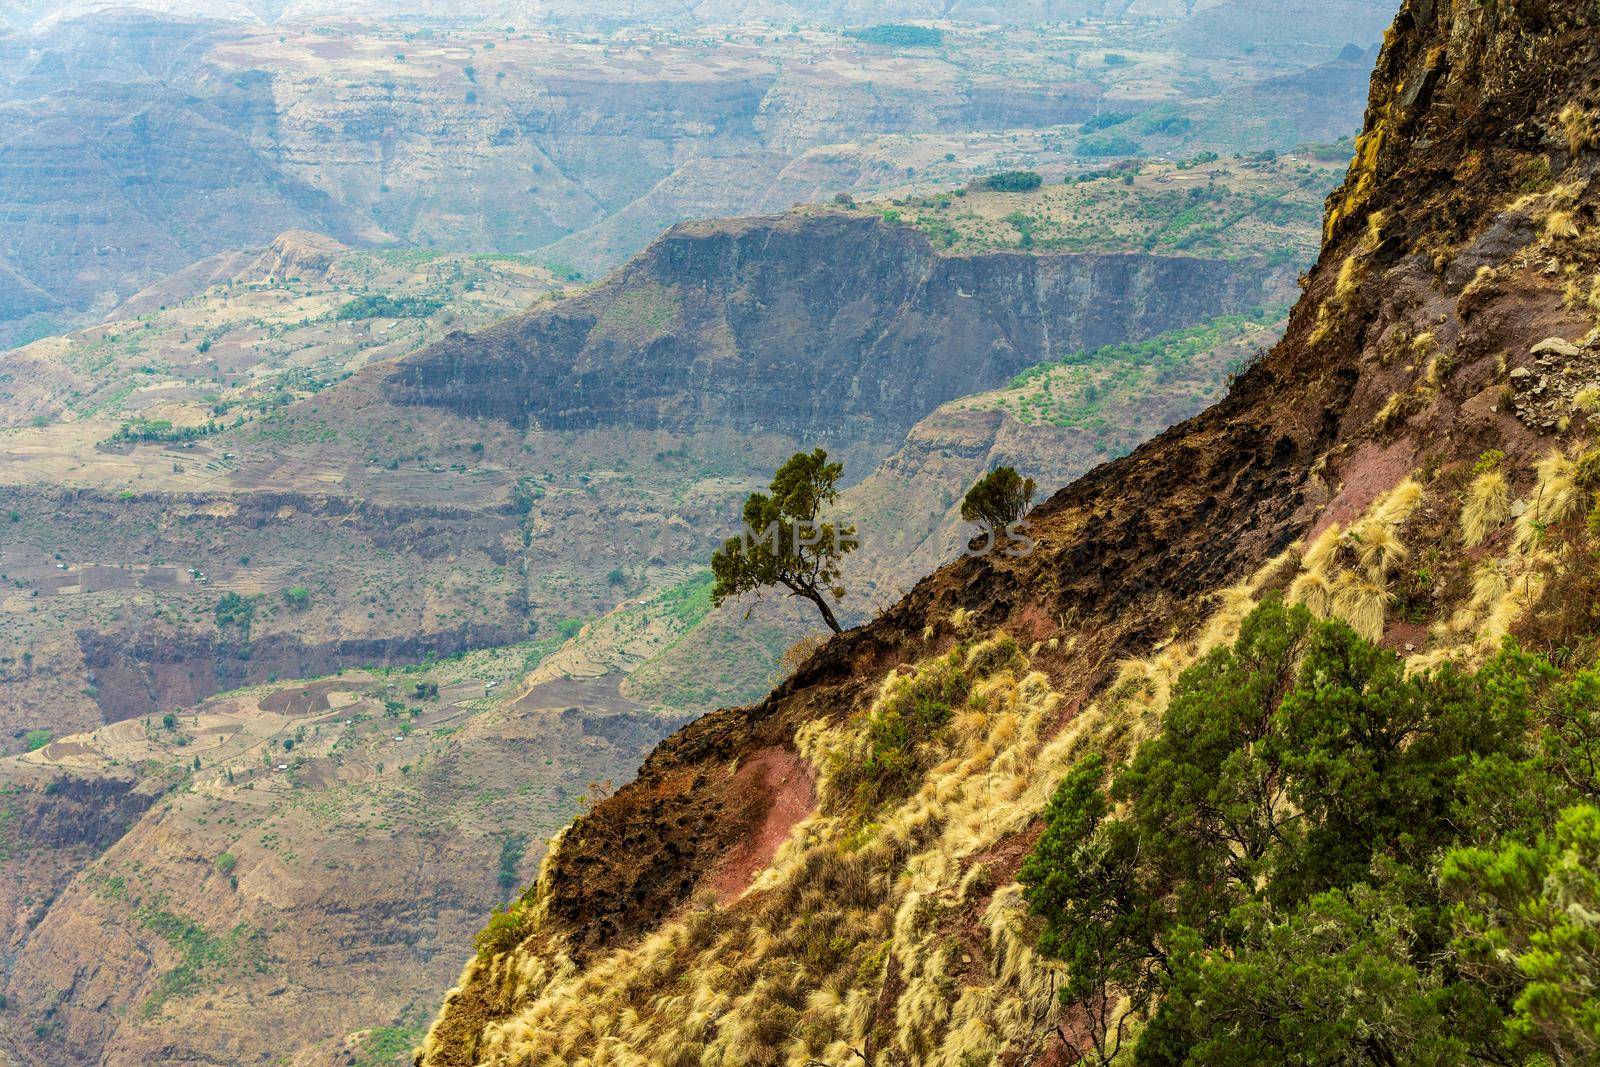 Ethiopian landscape, Ethiopia, Africa wilderness by artush